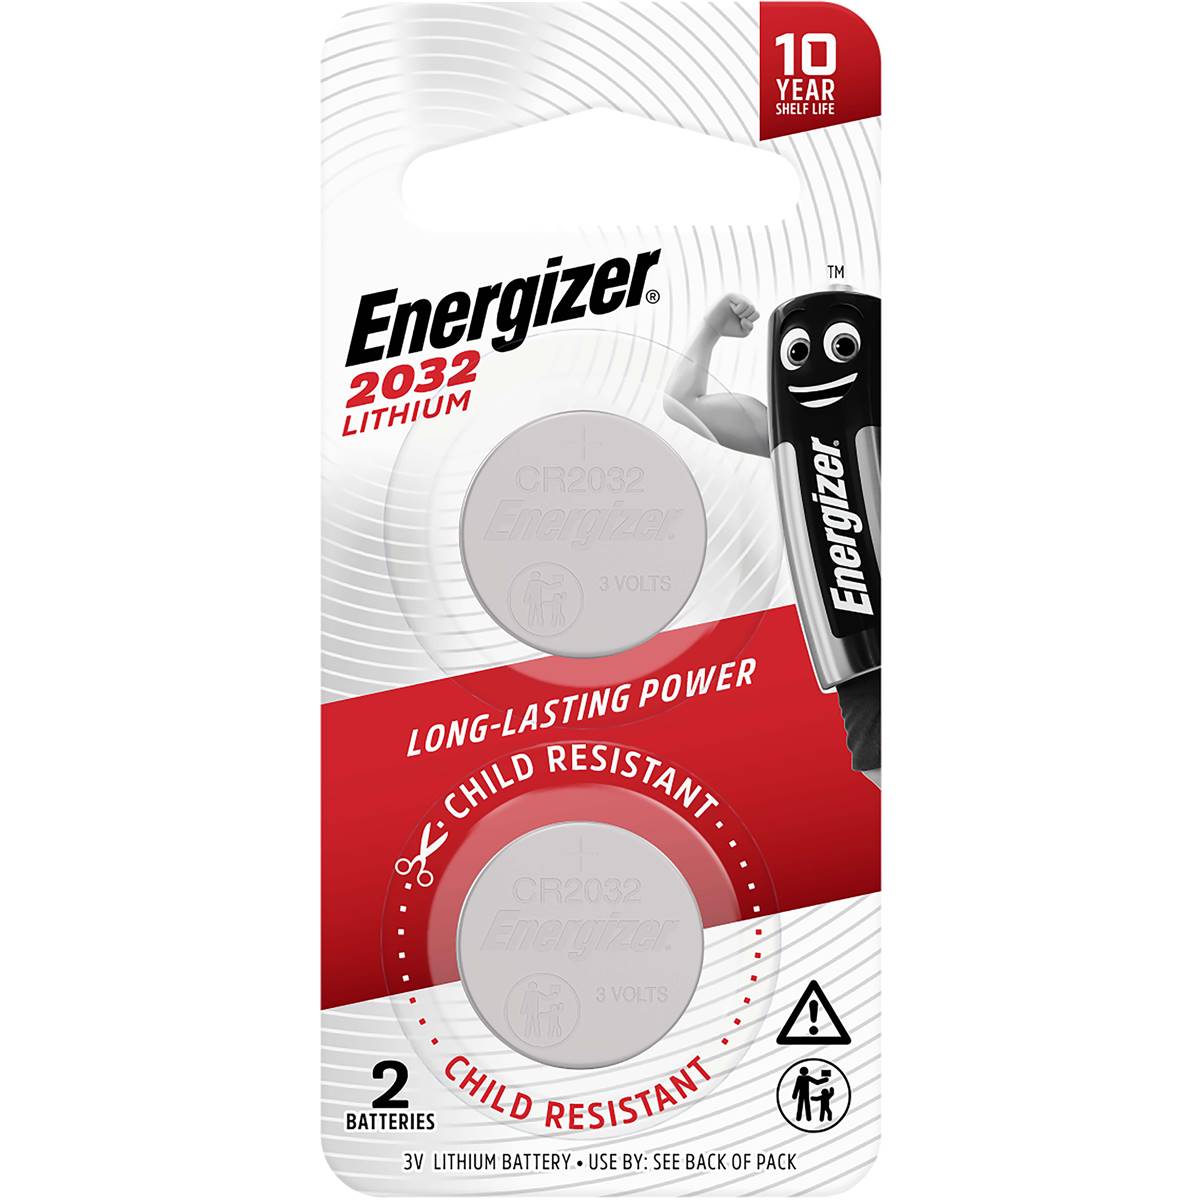 Energizer 2032 Lithium Batteries 2 Pack